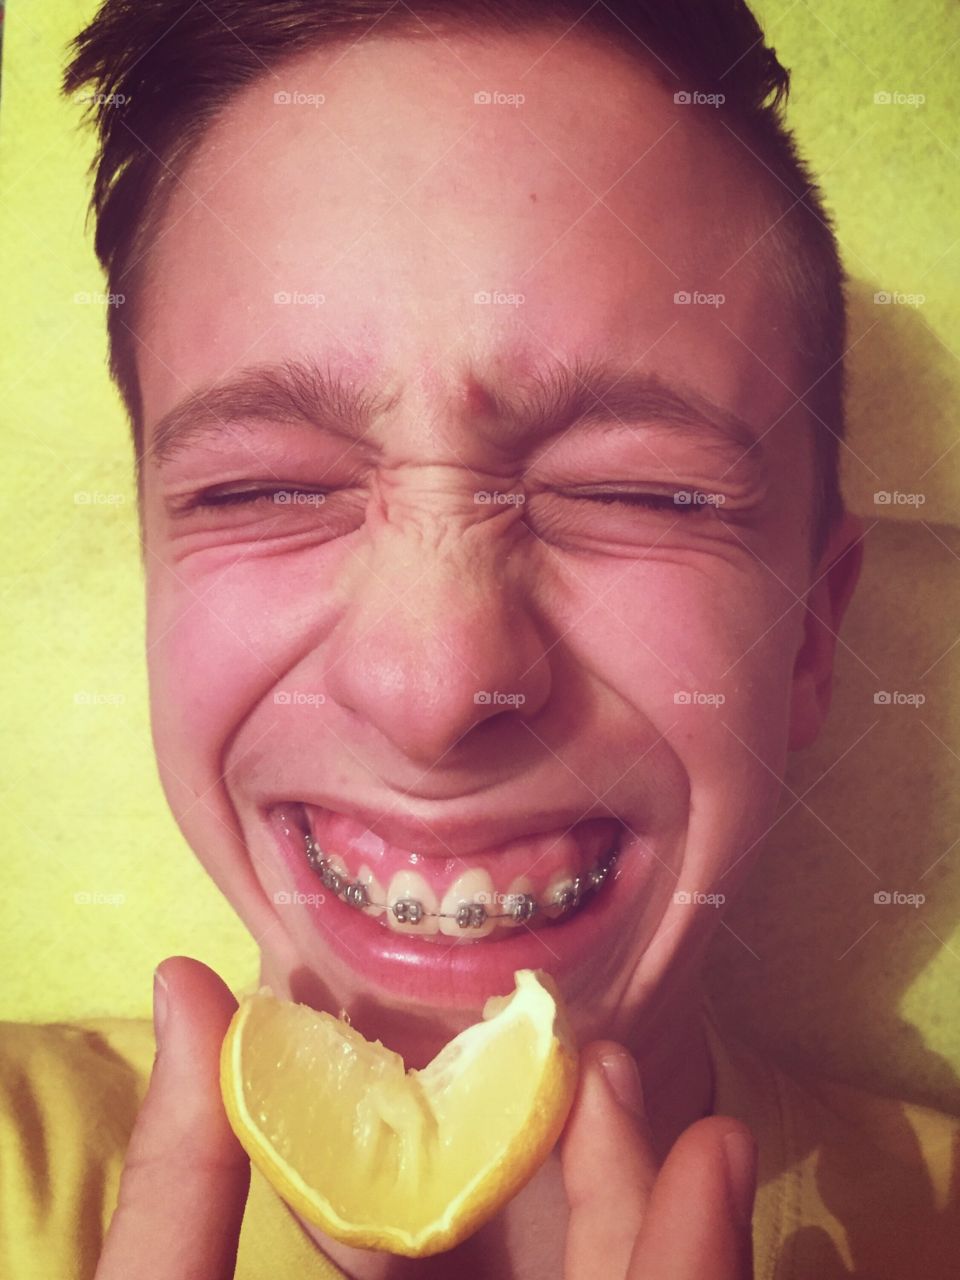 Lemon smile 🍋